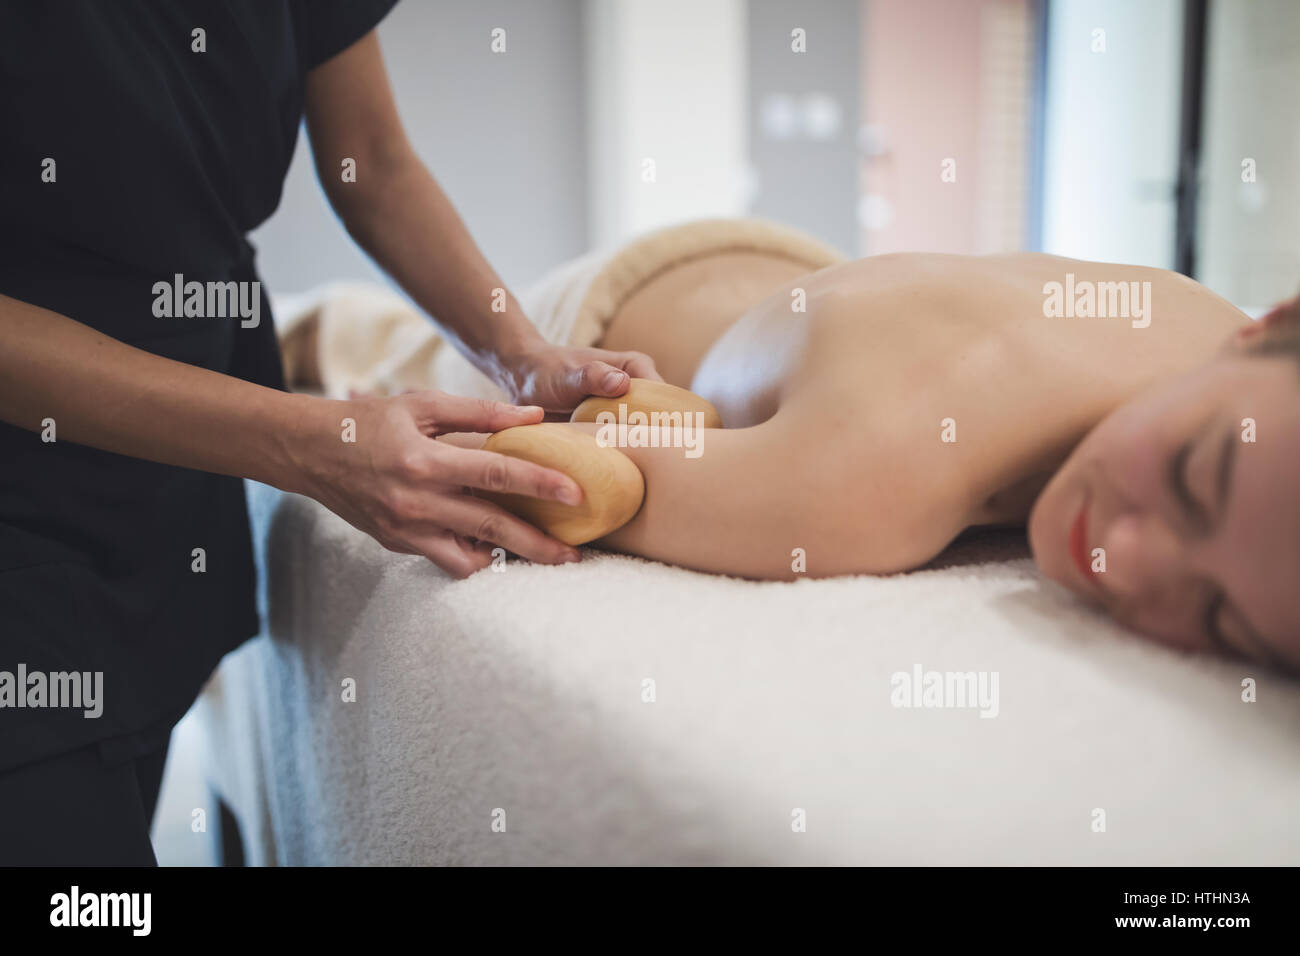 Cliend enjoying massage treatment given by masseur Stock Photo